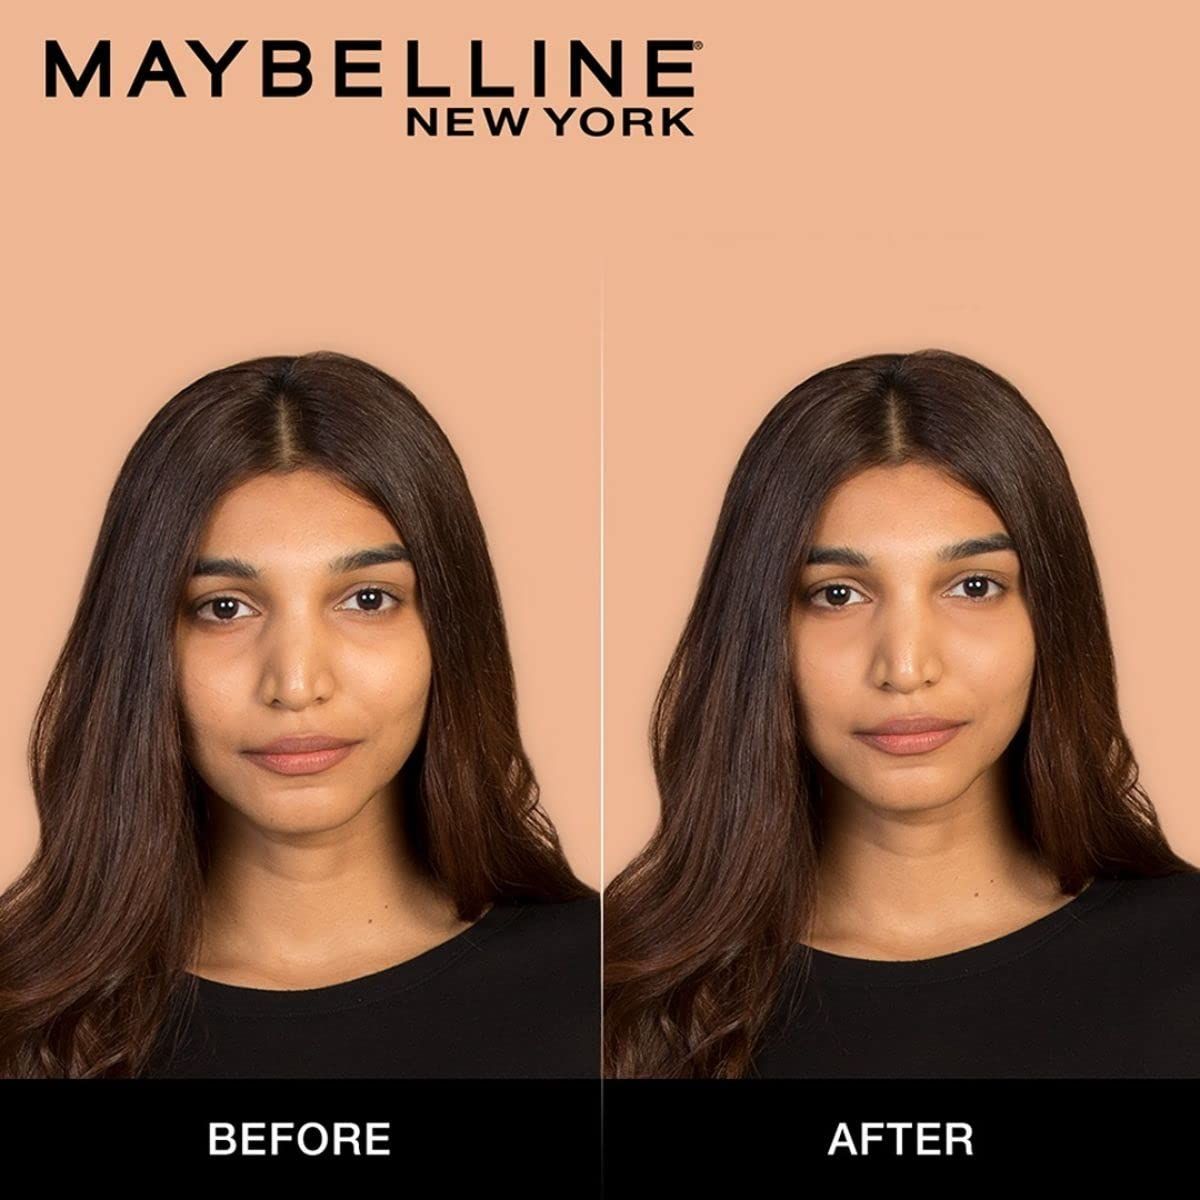 Maybelline Matte and Poreless Ultra Blendable New York Full Coverage Concealer Lotion - Fit Me, 36 Golden Caramel, 6.8ml